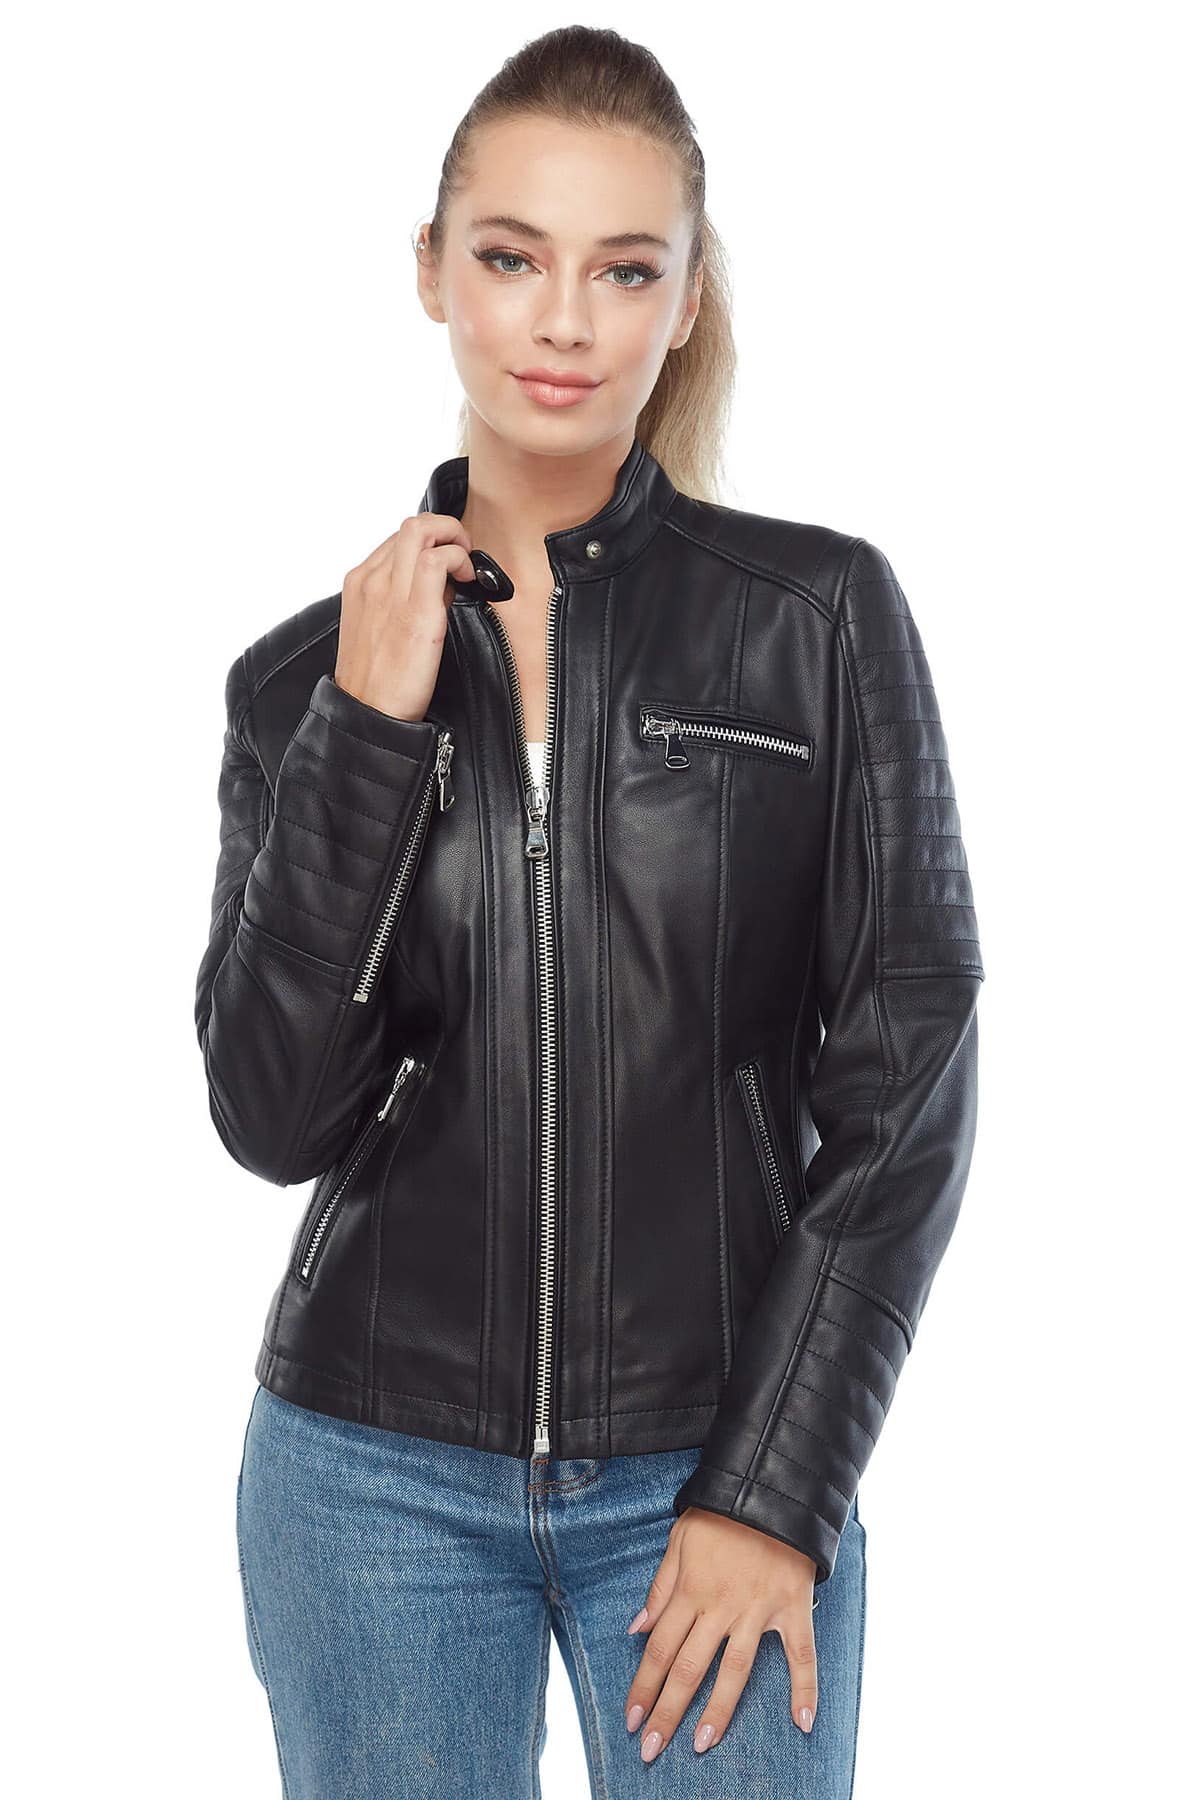 Sarah Archer Women's 100 % Real Black Leather Jacket